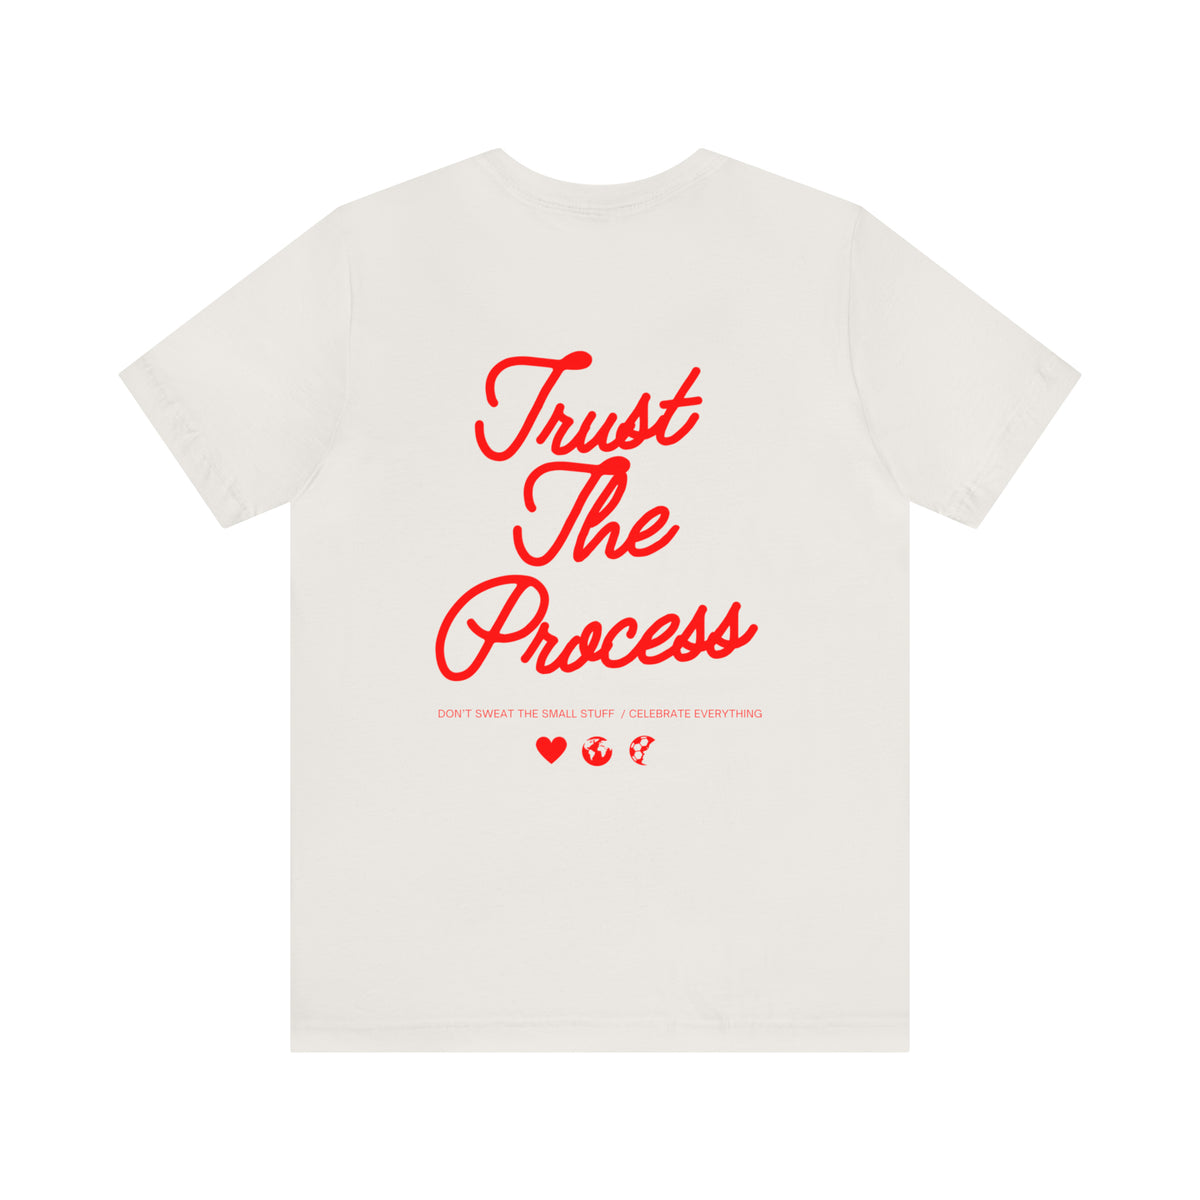 Trust The Process Adult T-Shirt